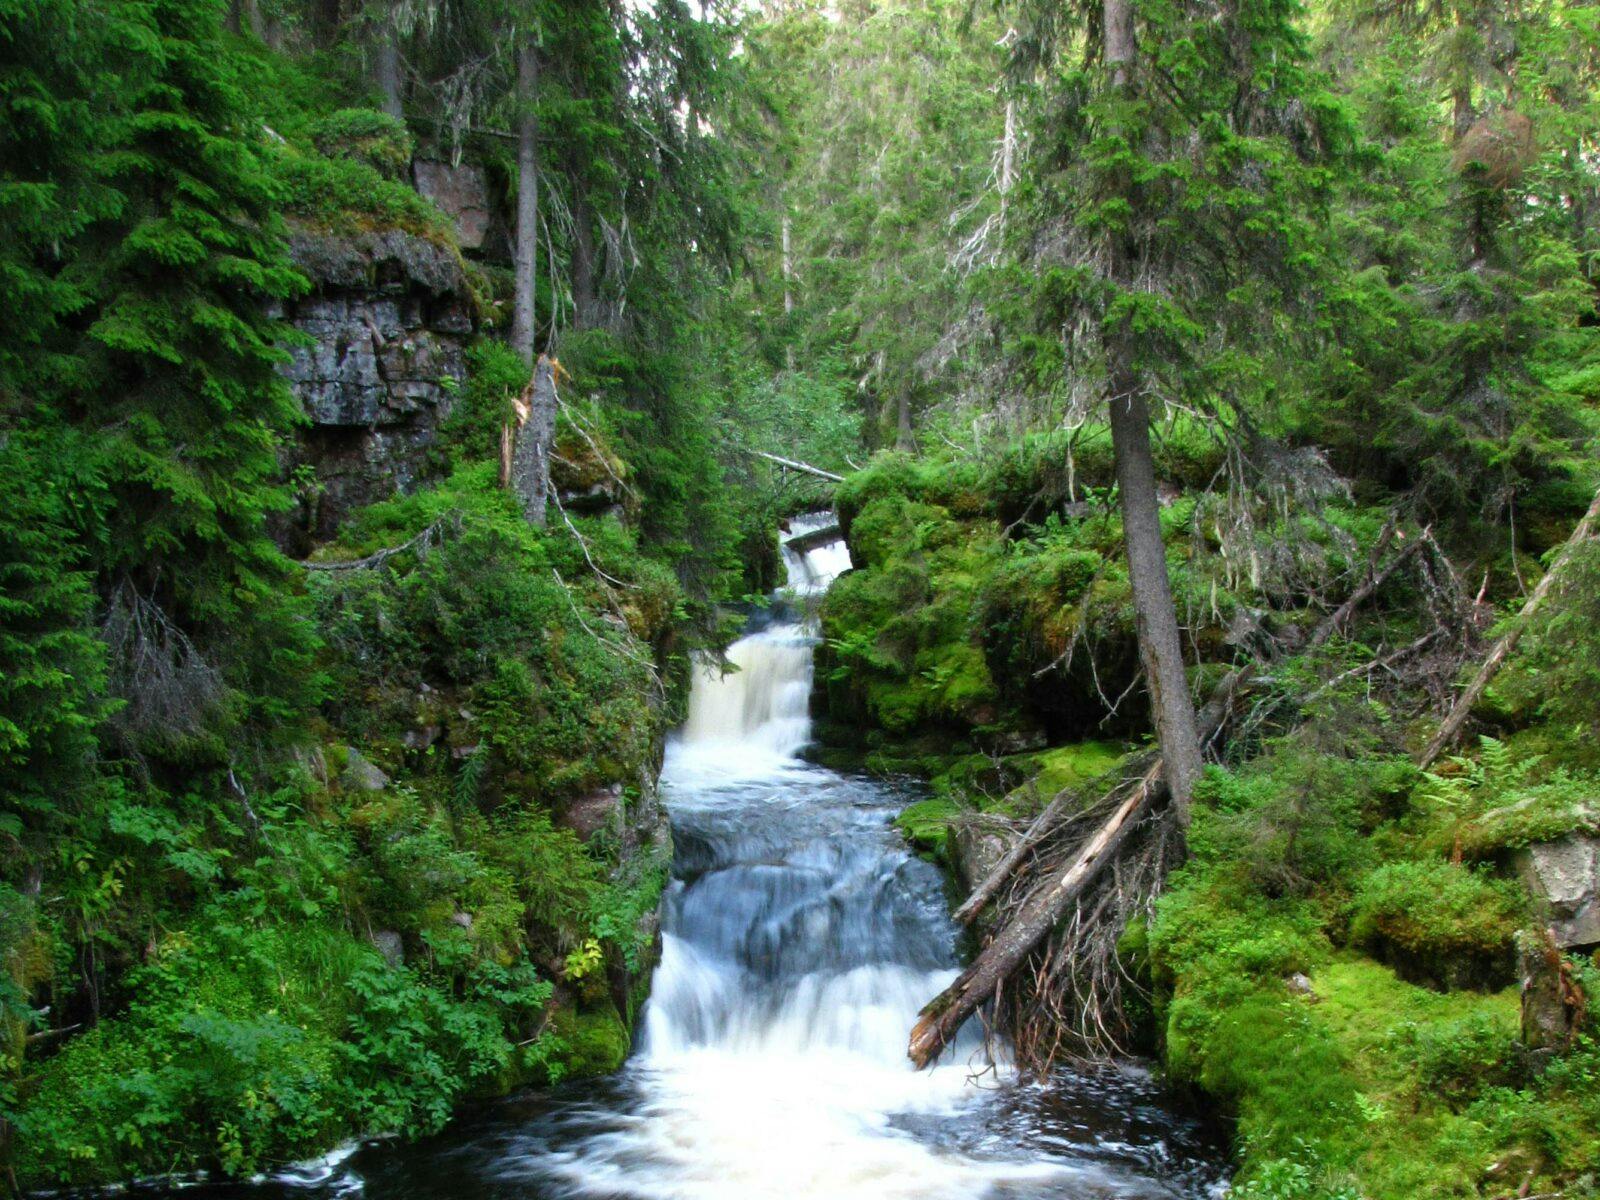 Skog, Sverige, rinnande vatten, träd